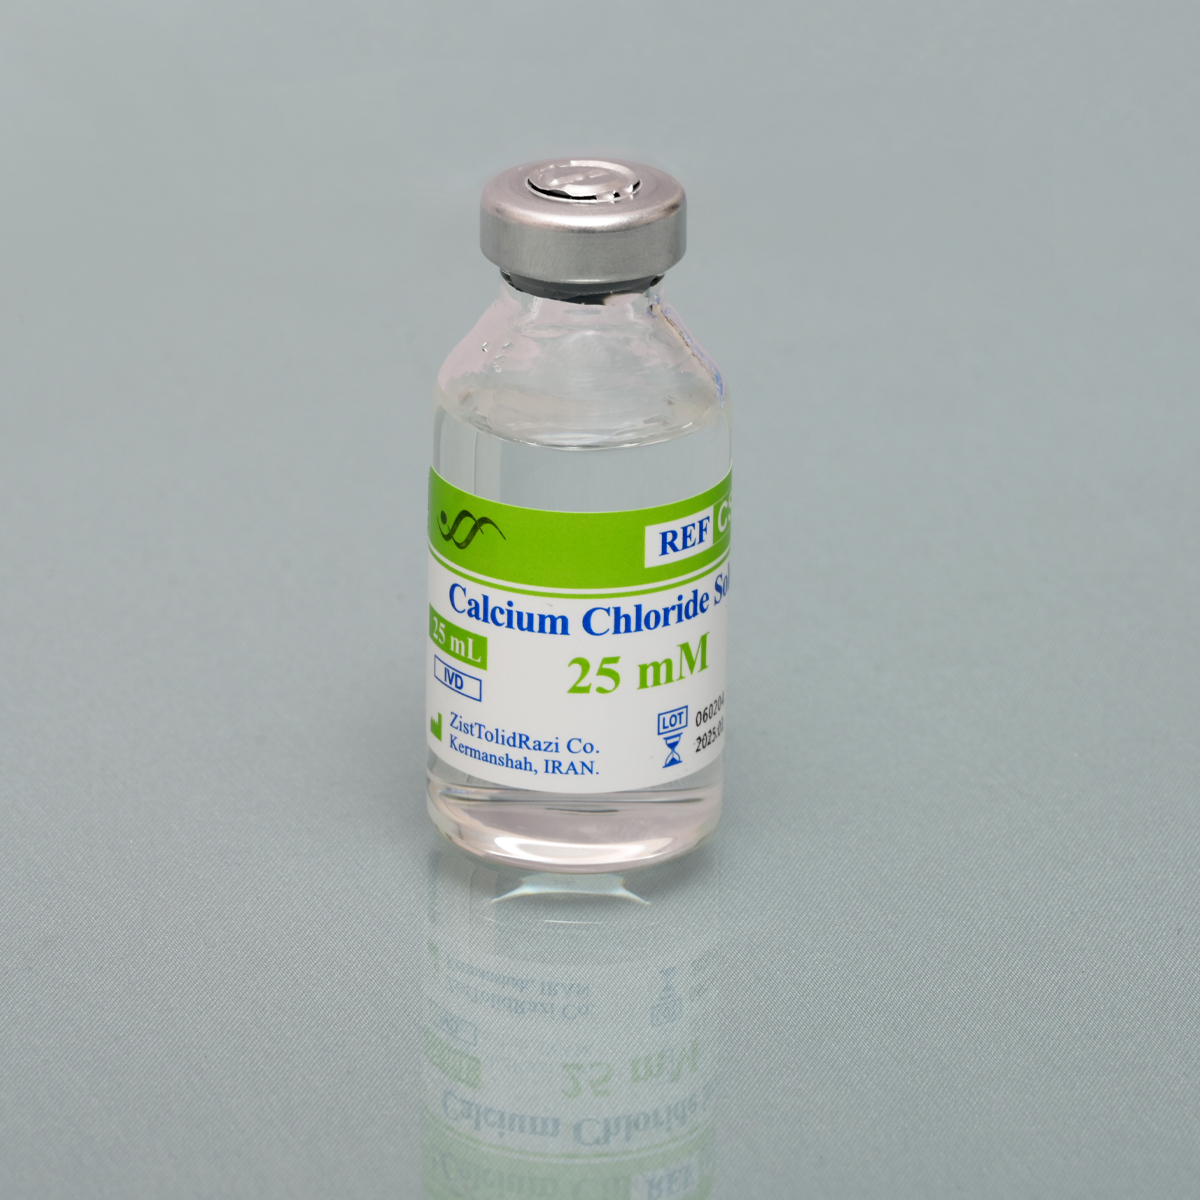 کلسیم کلراید - CaCl2 - زیست تولید رازی - کیت - هماتولوژی و بانک خون - نوآوران طب بین الملل